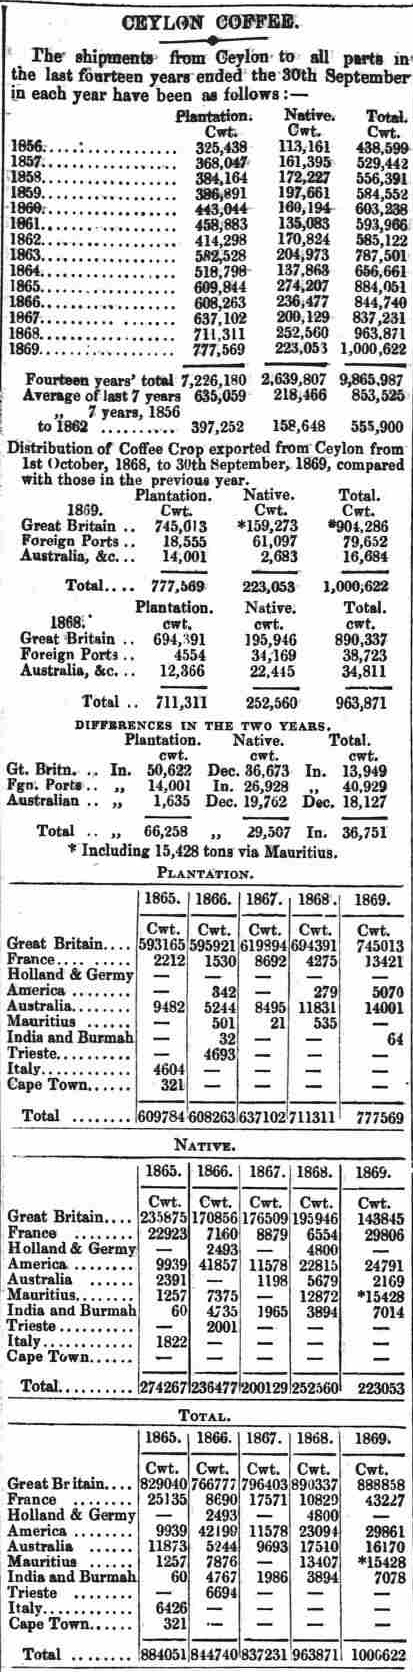 31.Ceylon Coffee - Shipment data from 1856 to 1869